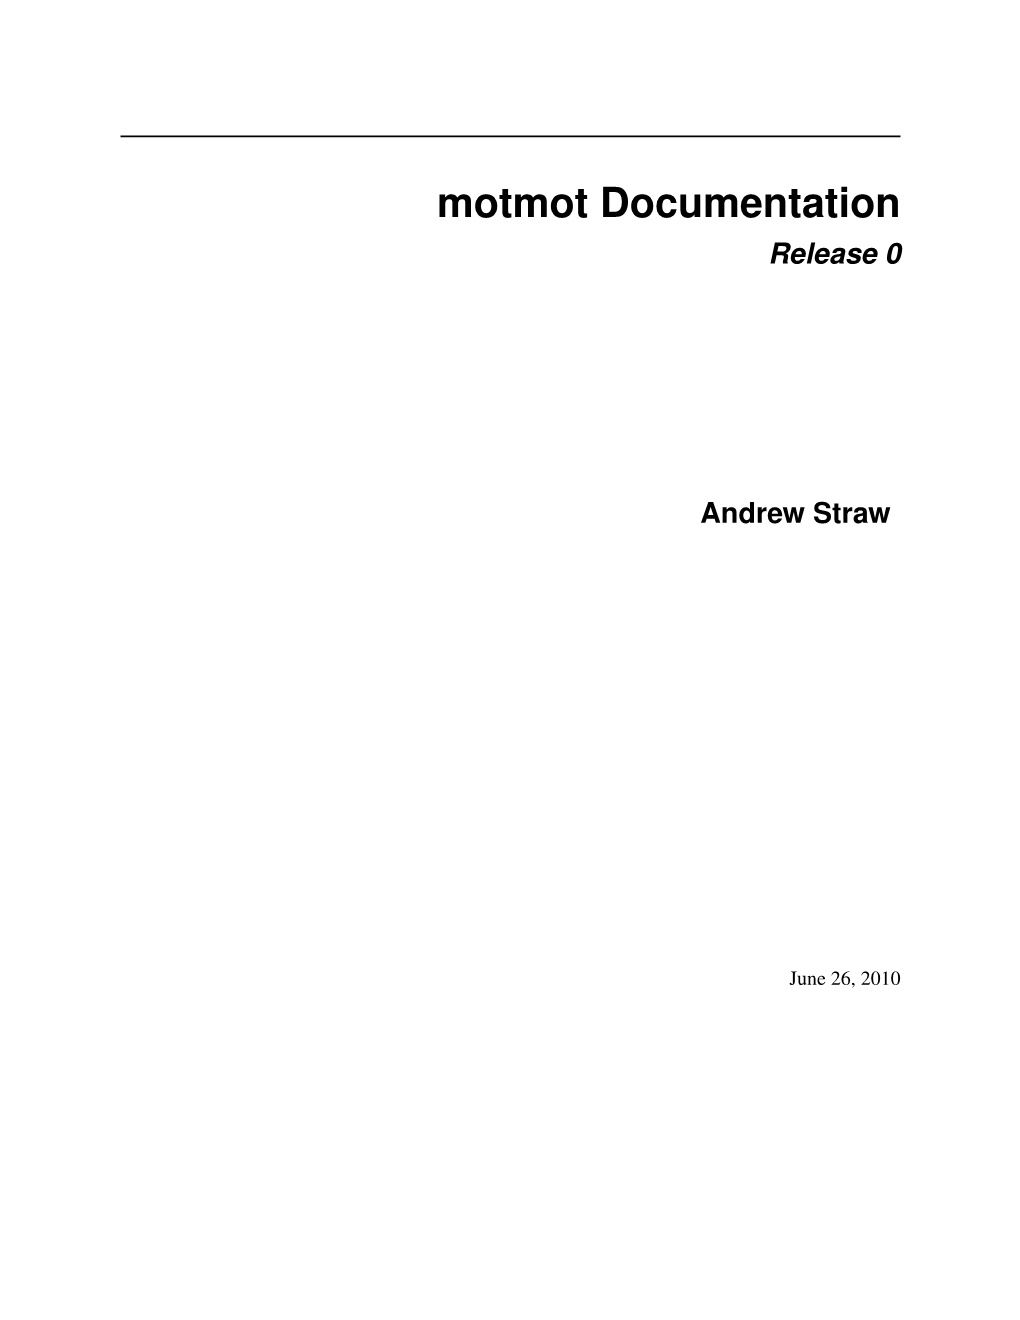 Motmot Documentation Release 0